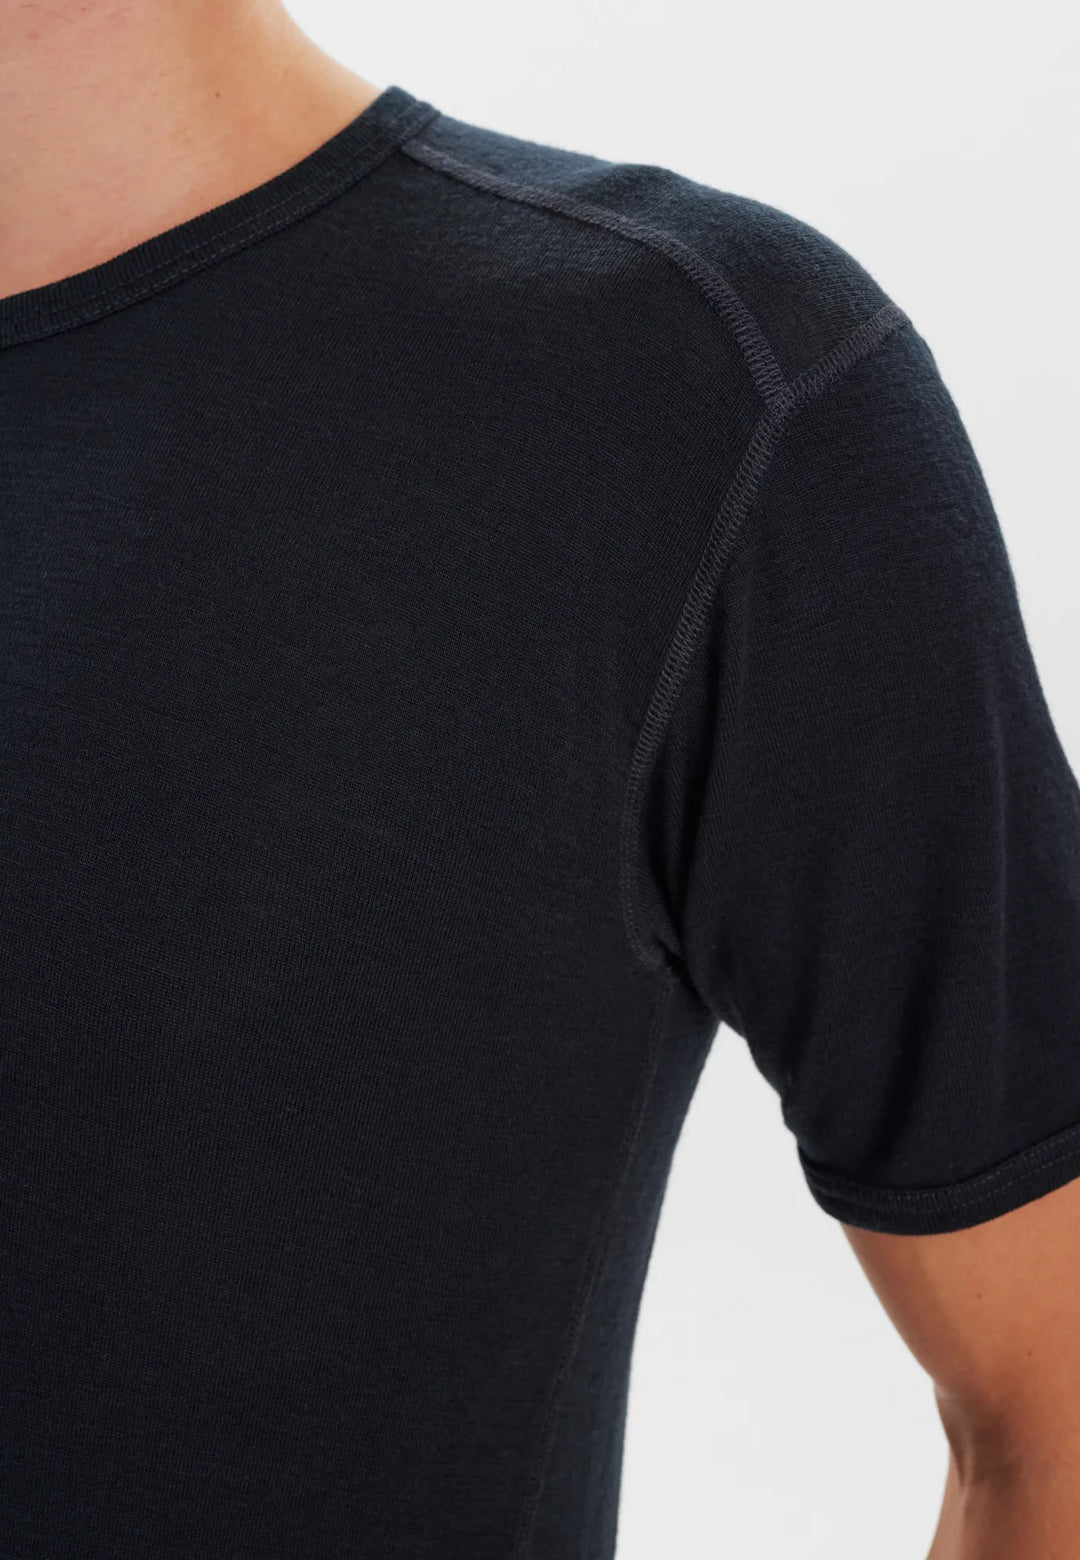 JBS "Wool" kortærmet t-shirt - skiundertrøje Herre - 100% Merinould